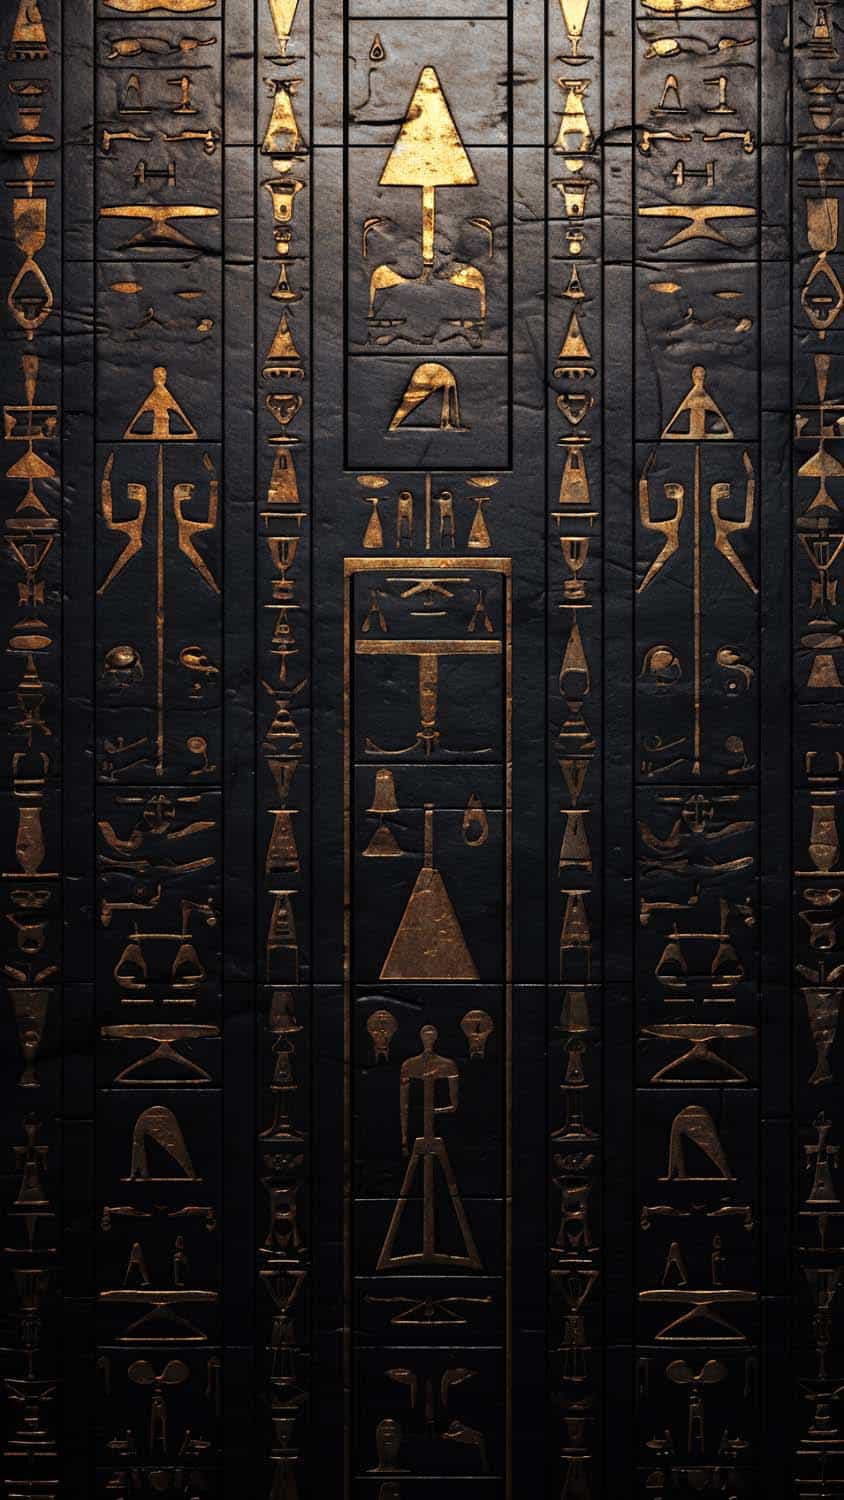 Egyptian Pyramid Art iPhone Wallpaper